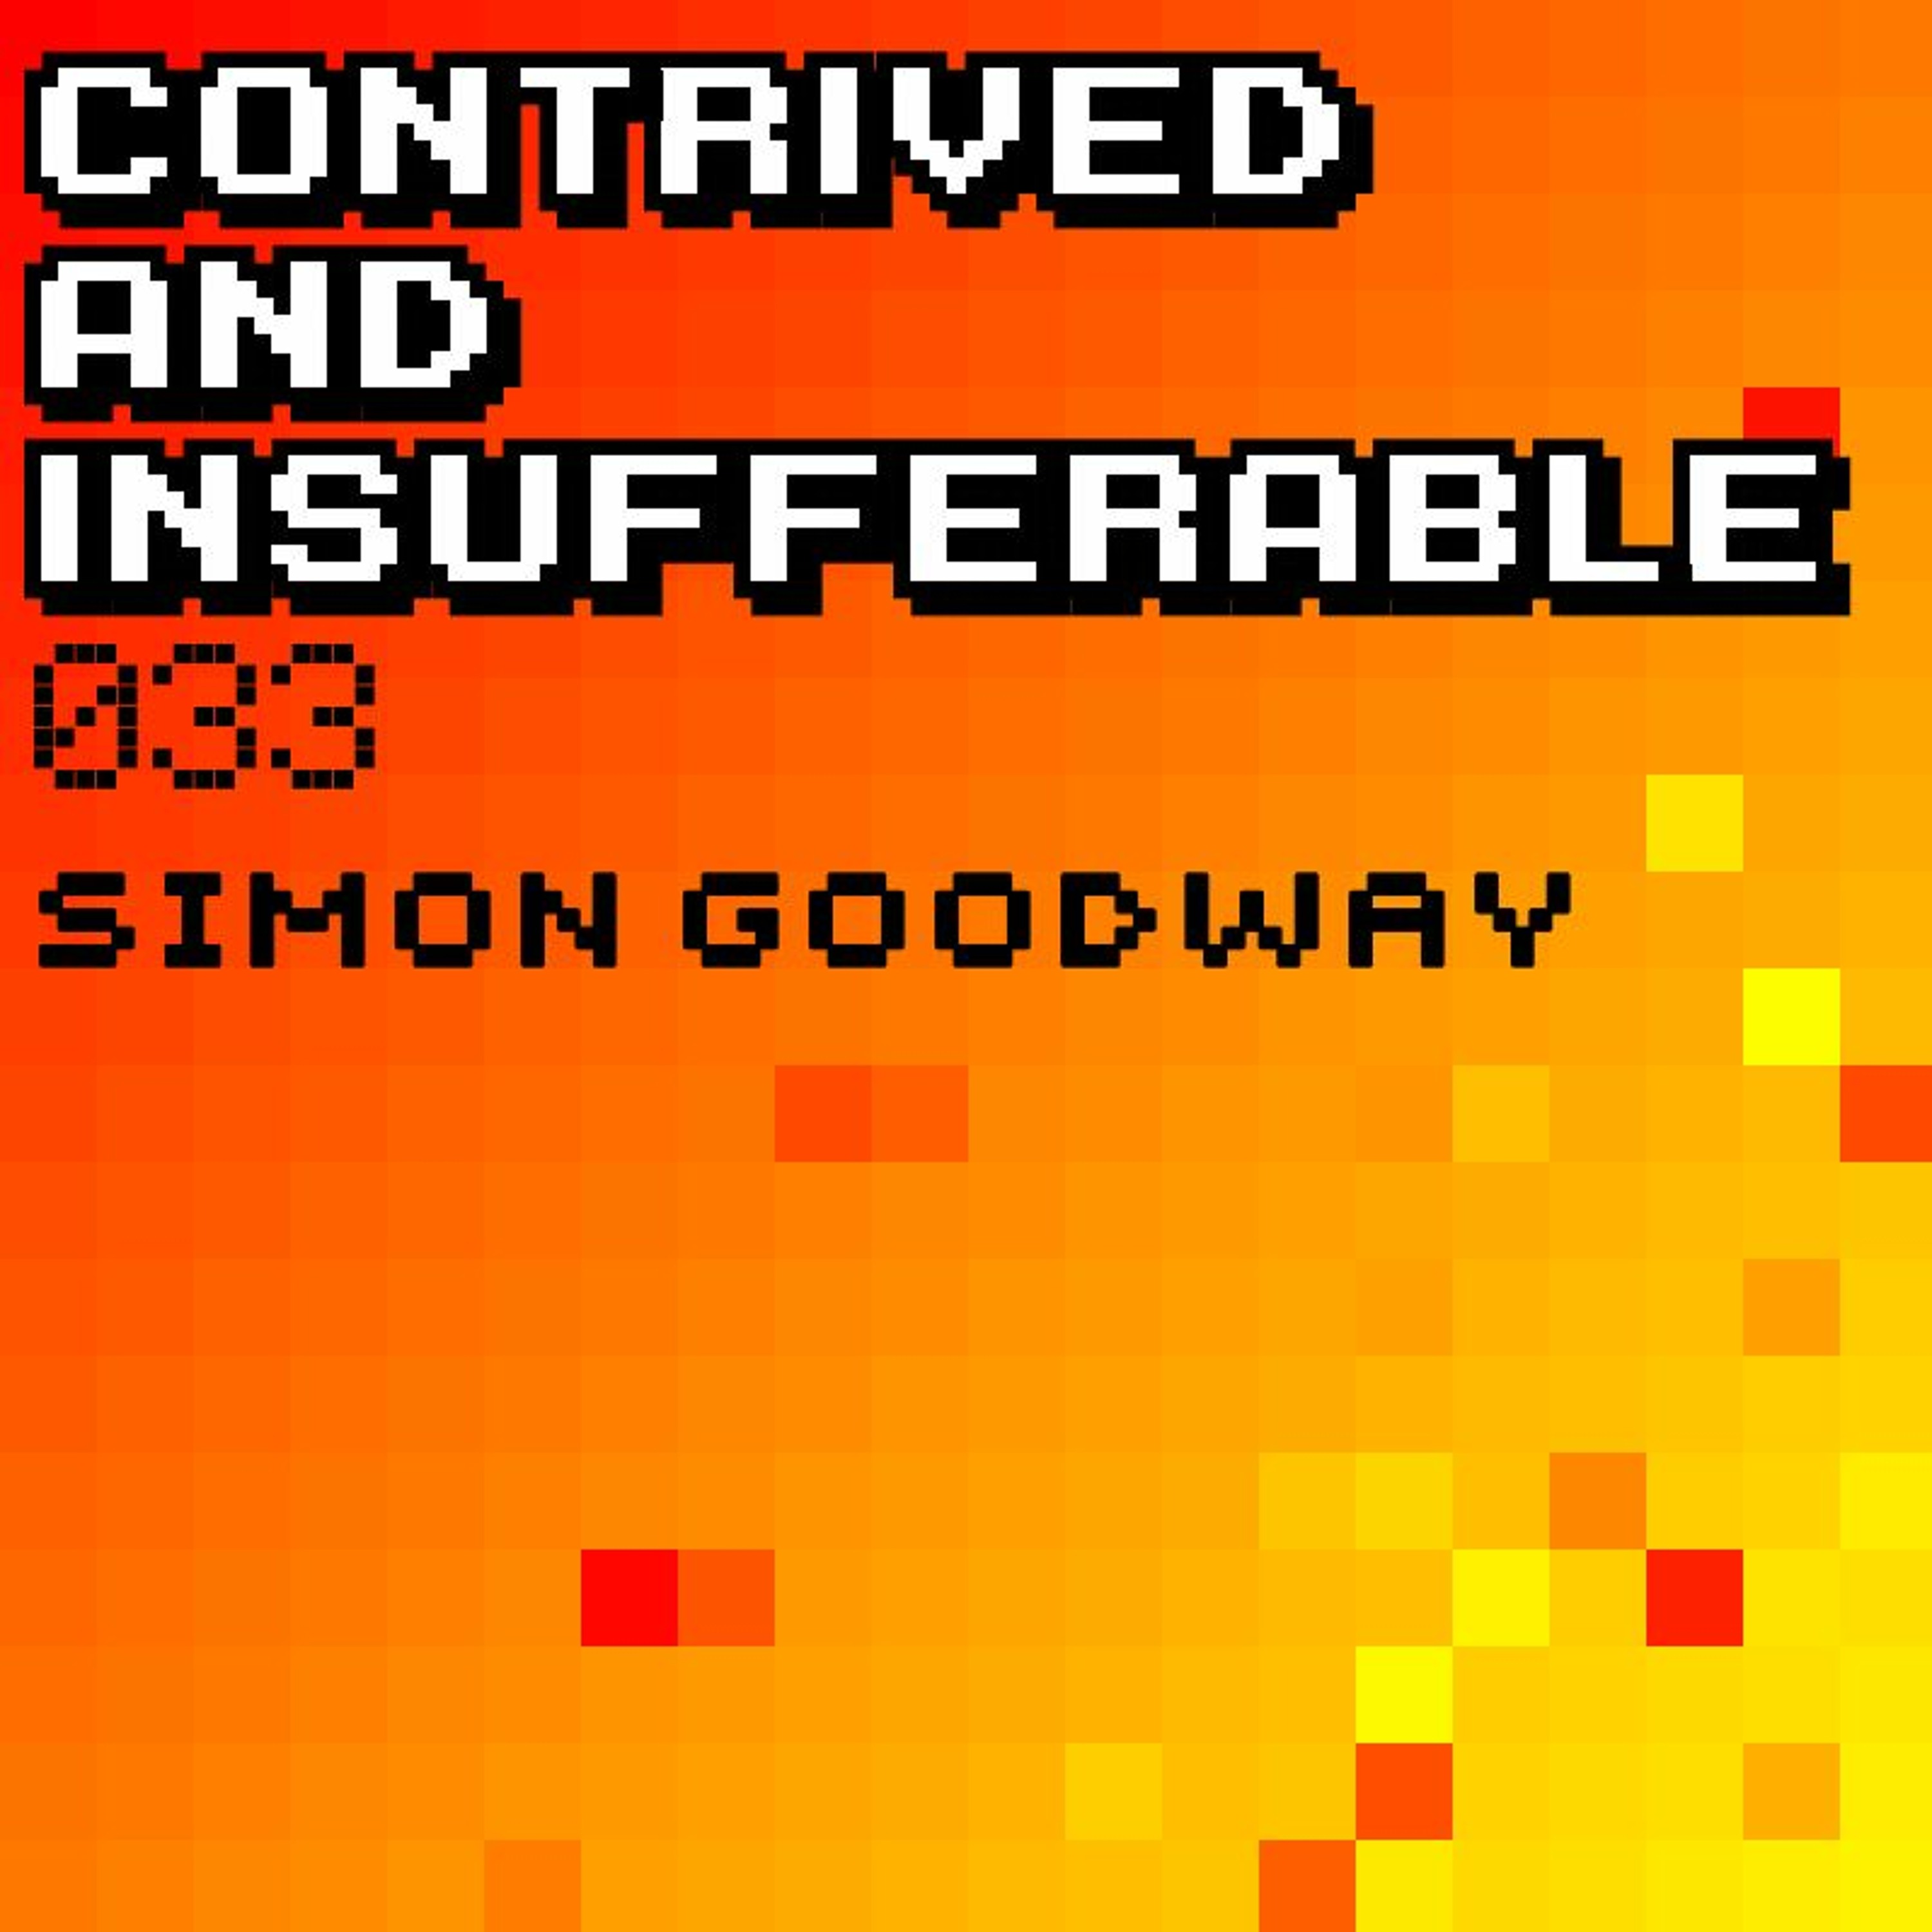 033: Simon Goodway | If it ain’t broke...